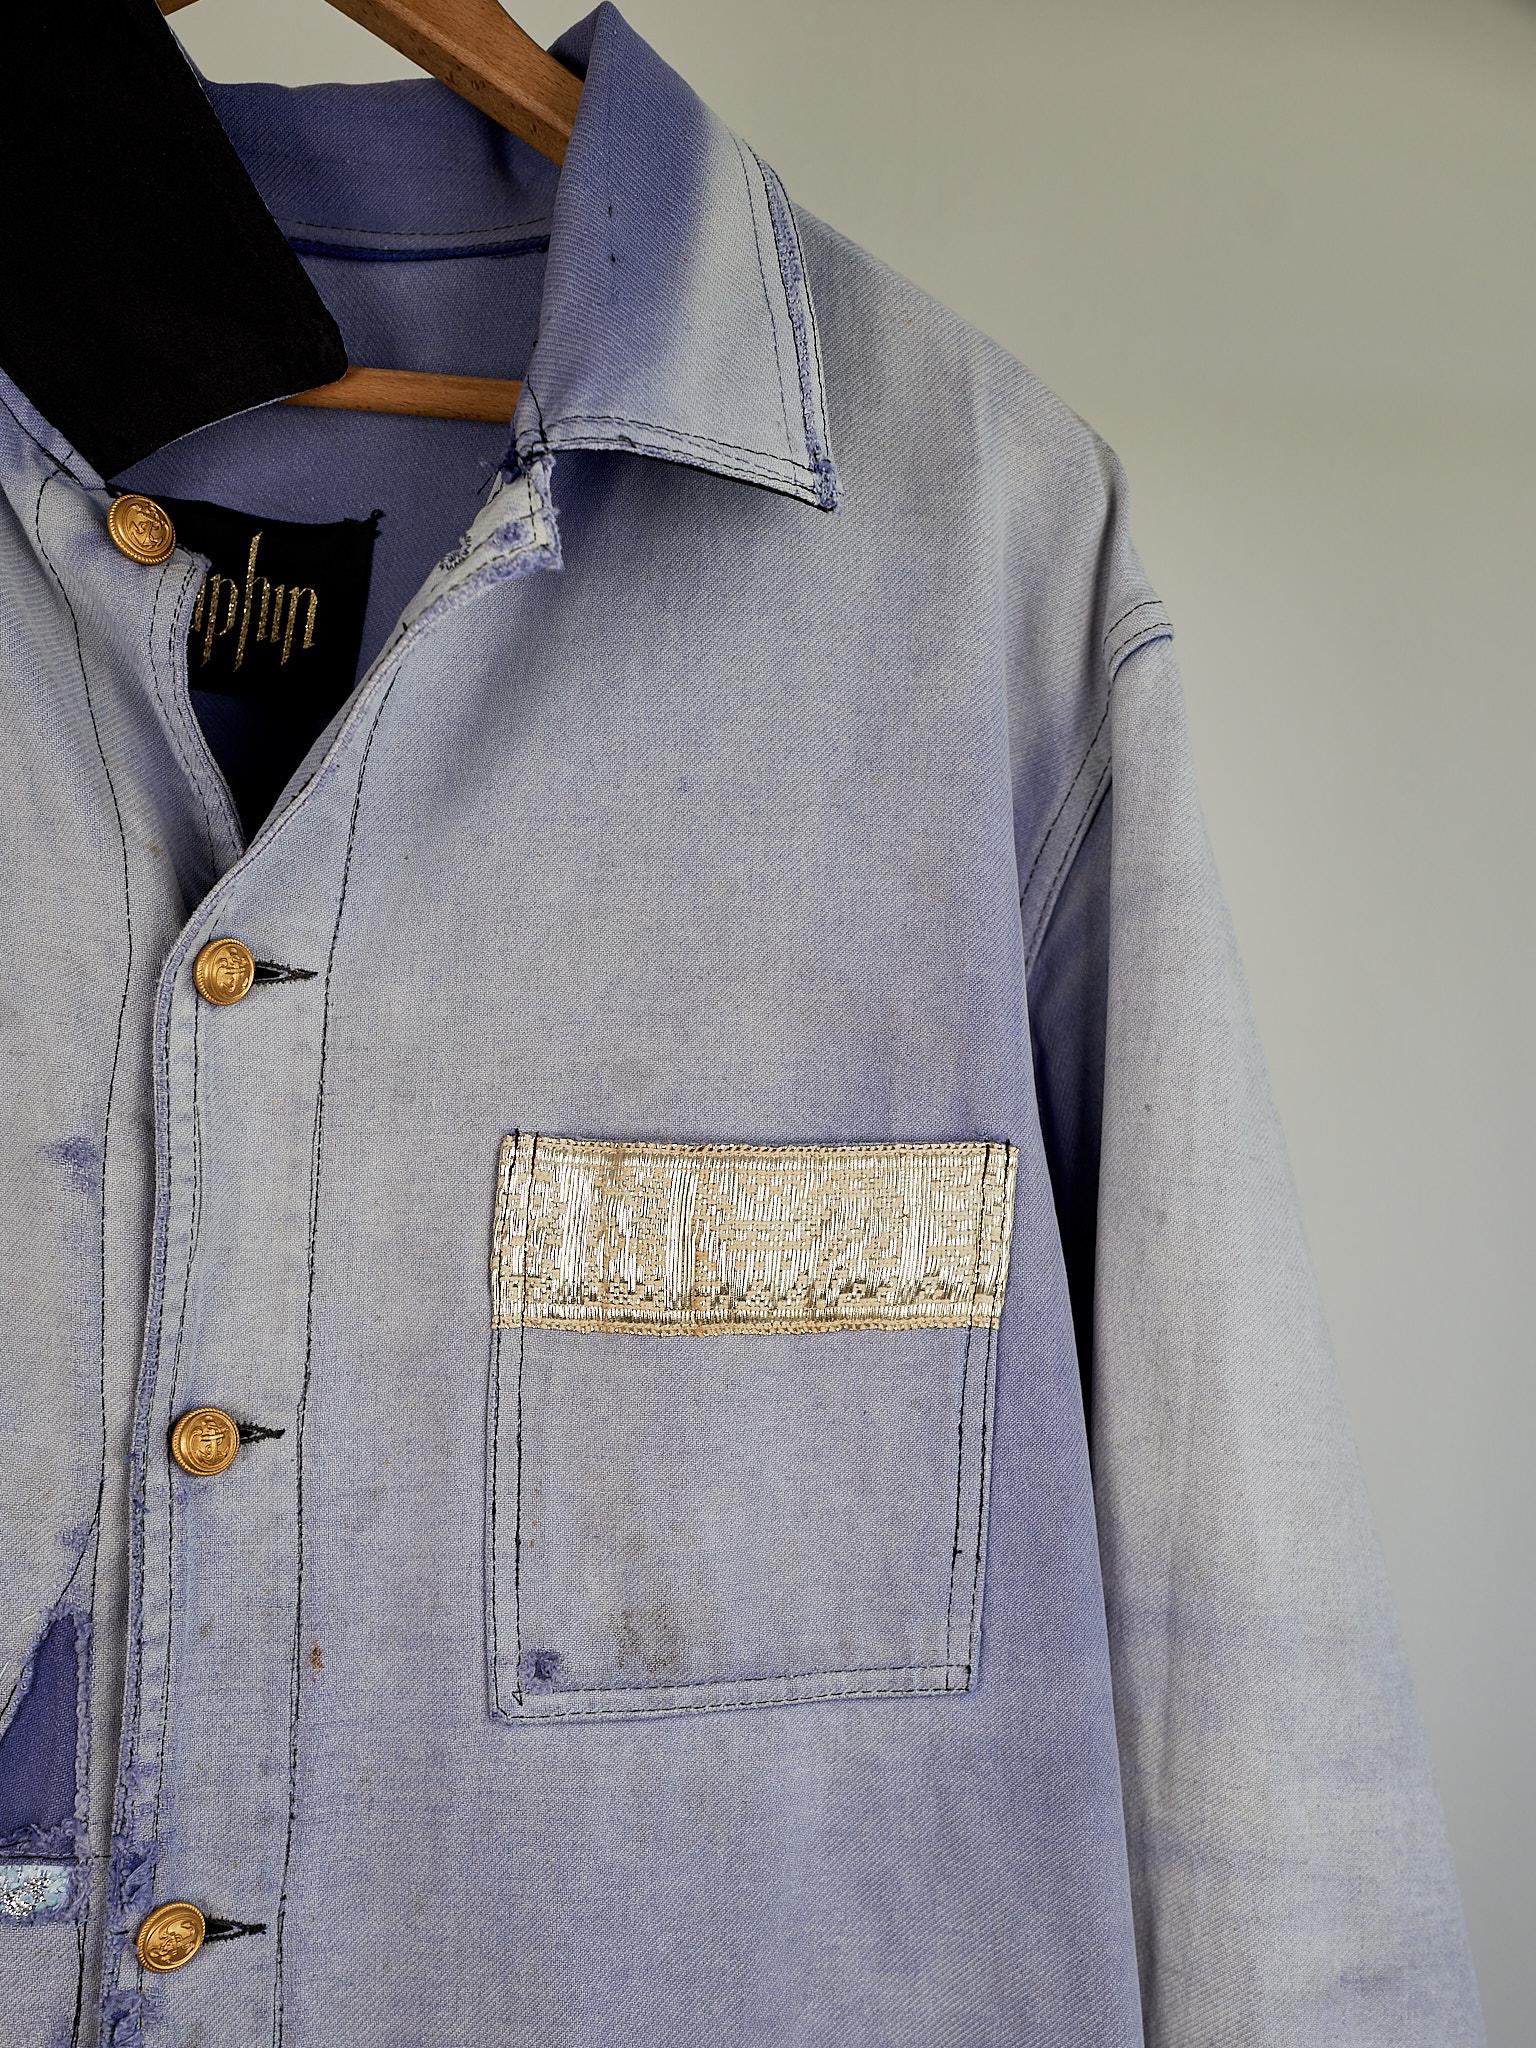 Light Blue Distressed Jacket French Work Wear Vintage Repurposed Silver Braid 2